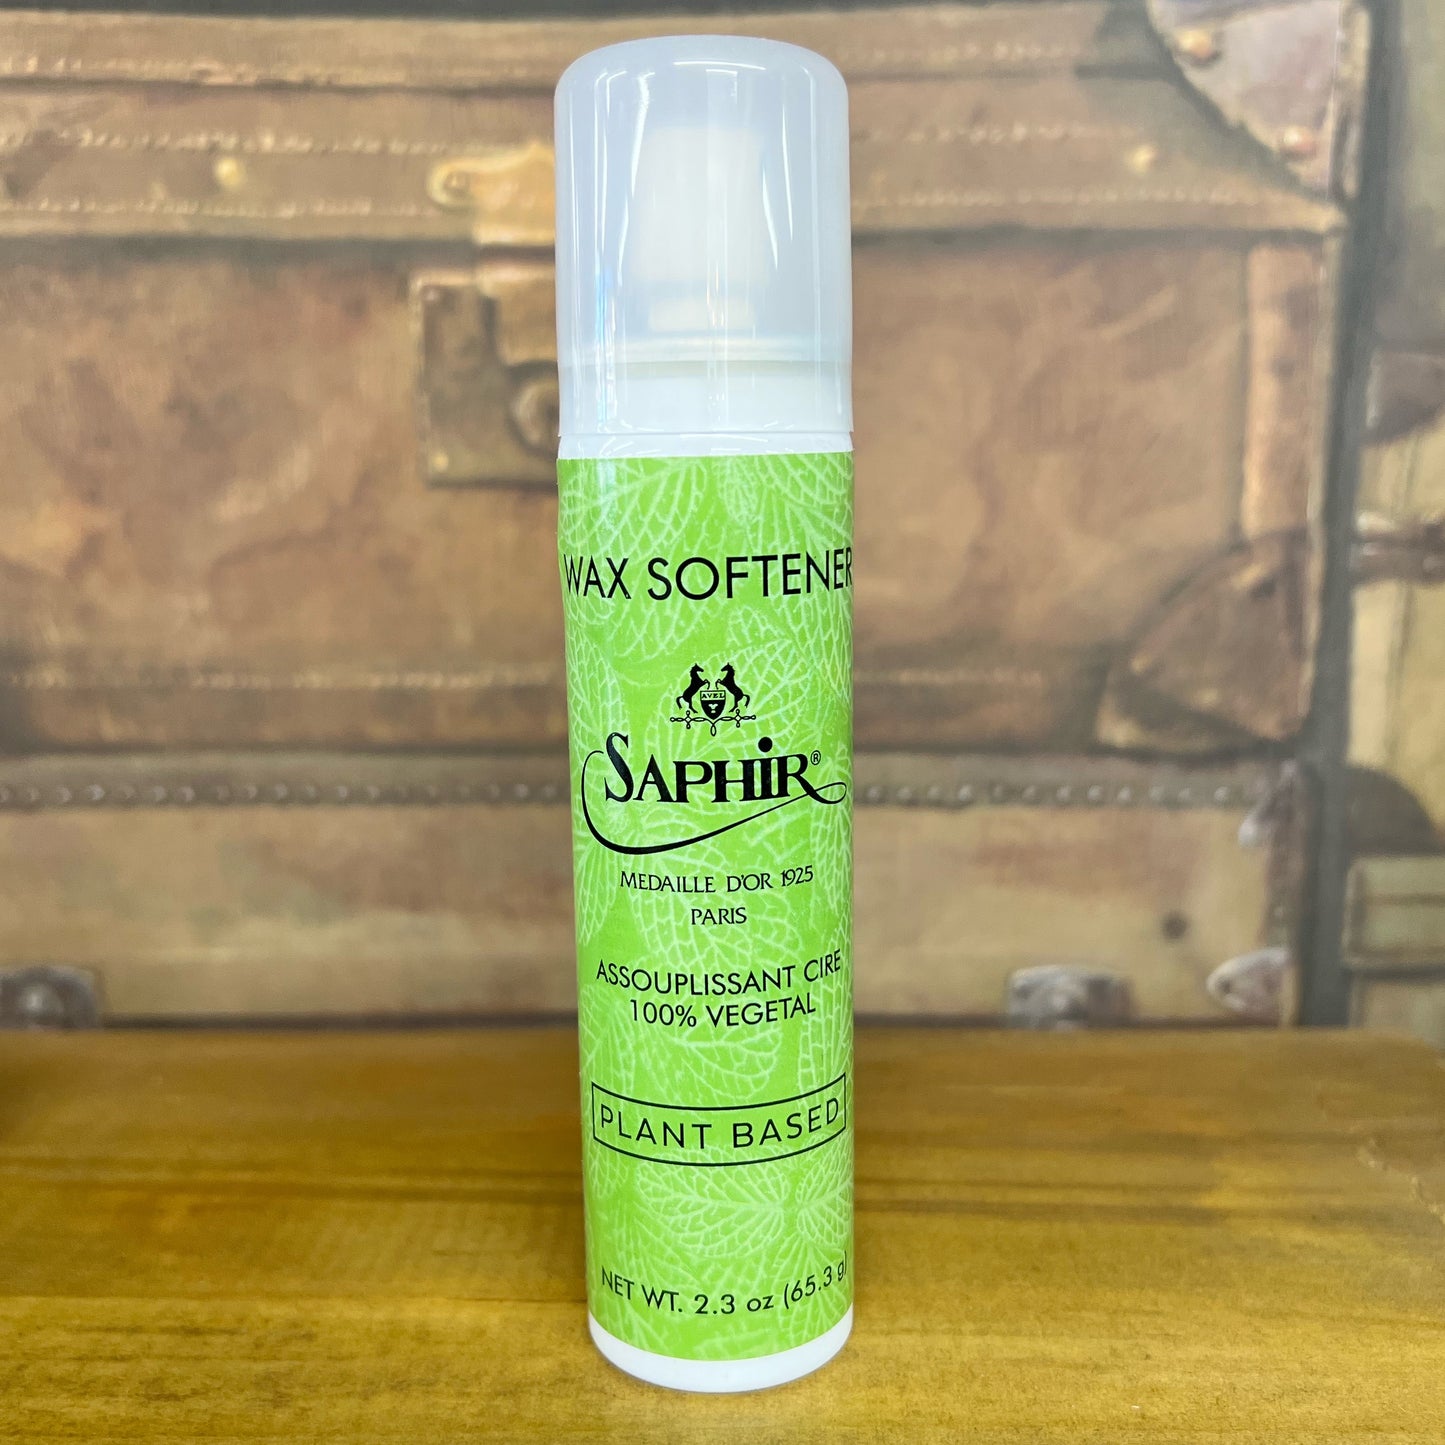 Saphir Plant Based Wax Softener Spray